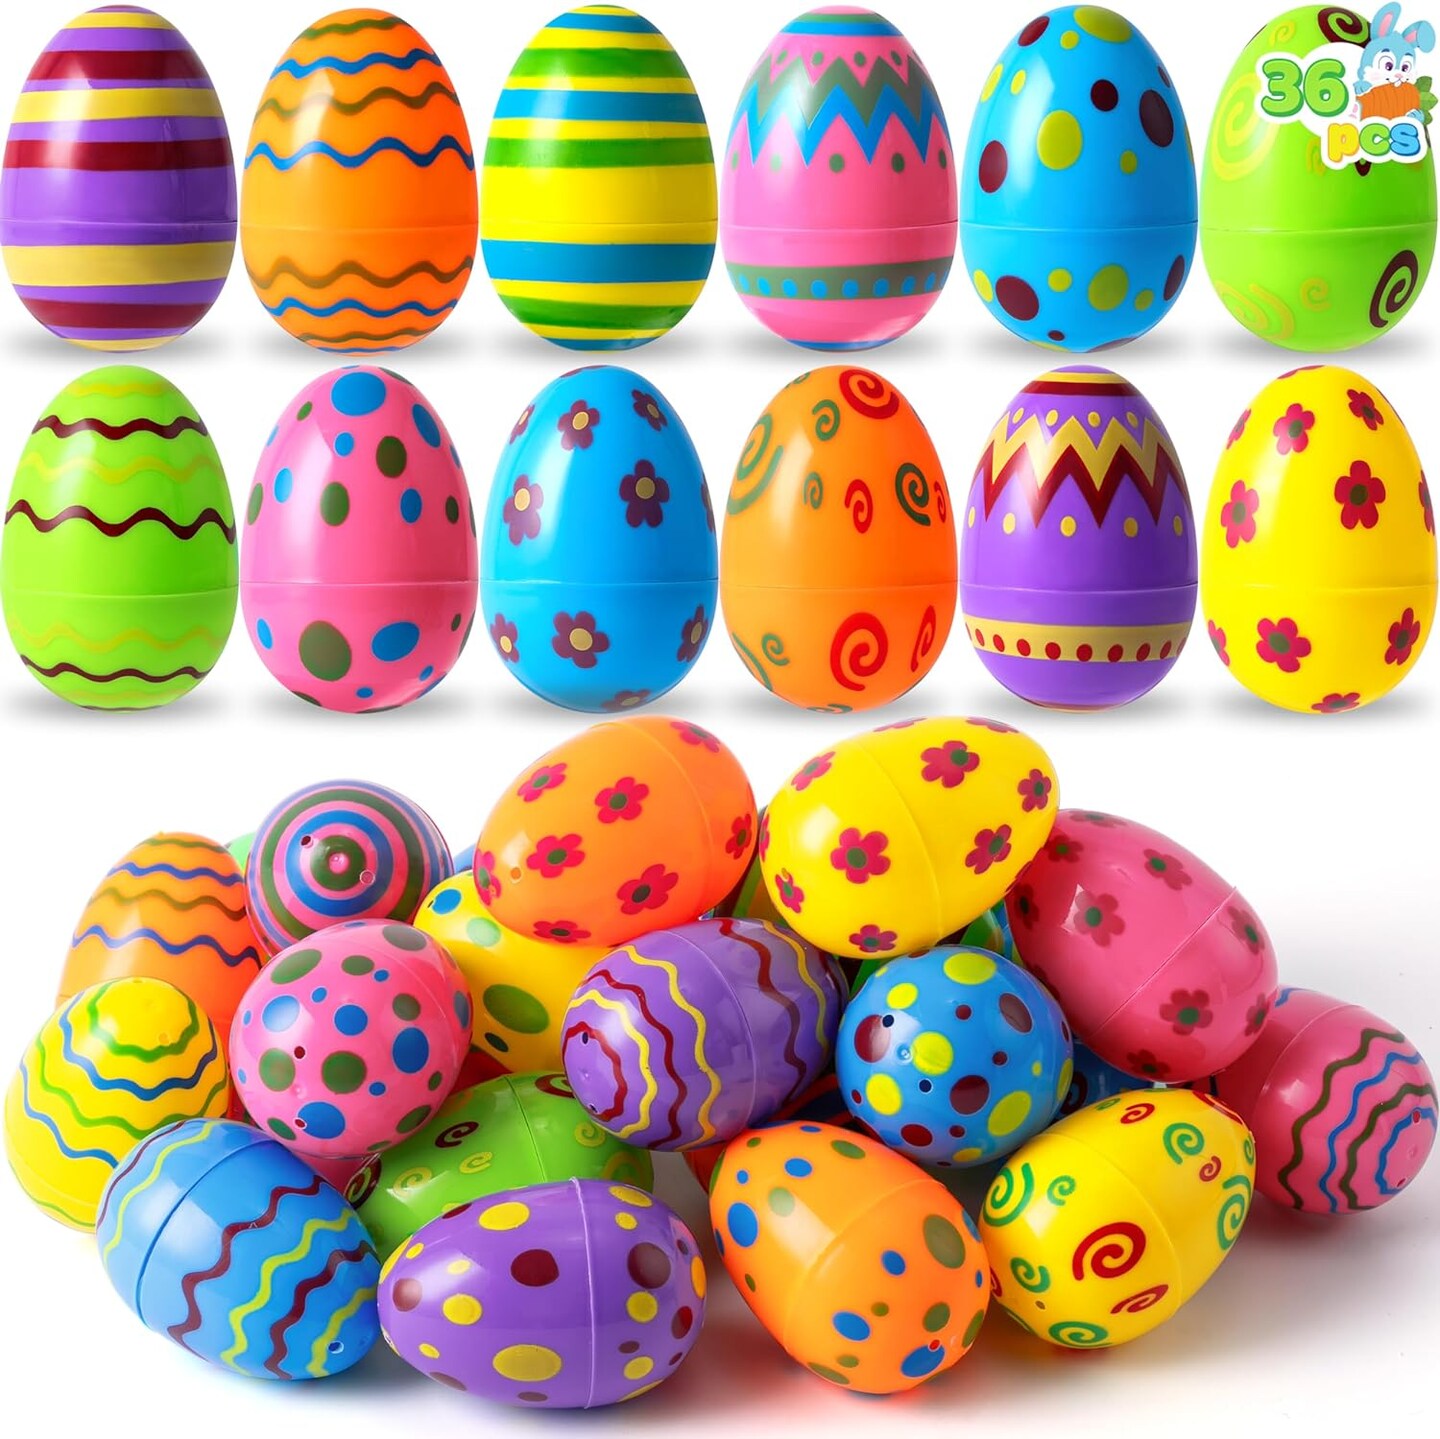 36 PCs Plastic Printed Bright Easter Eggs